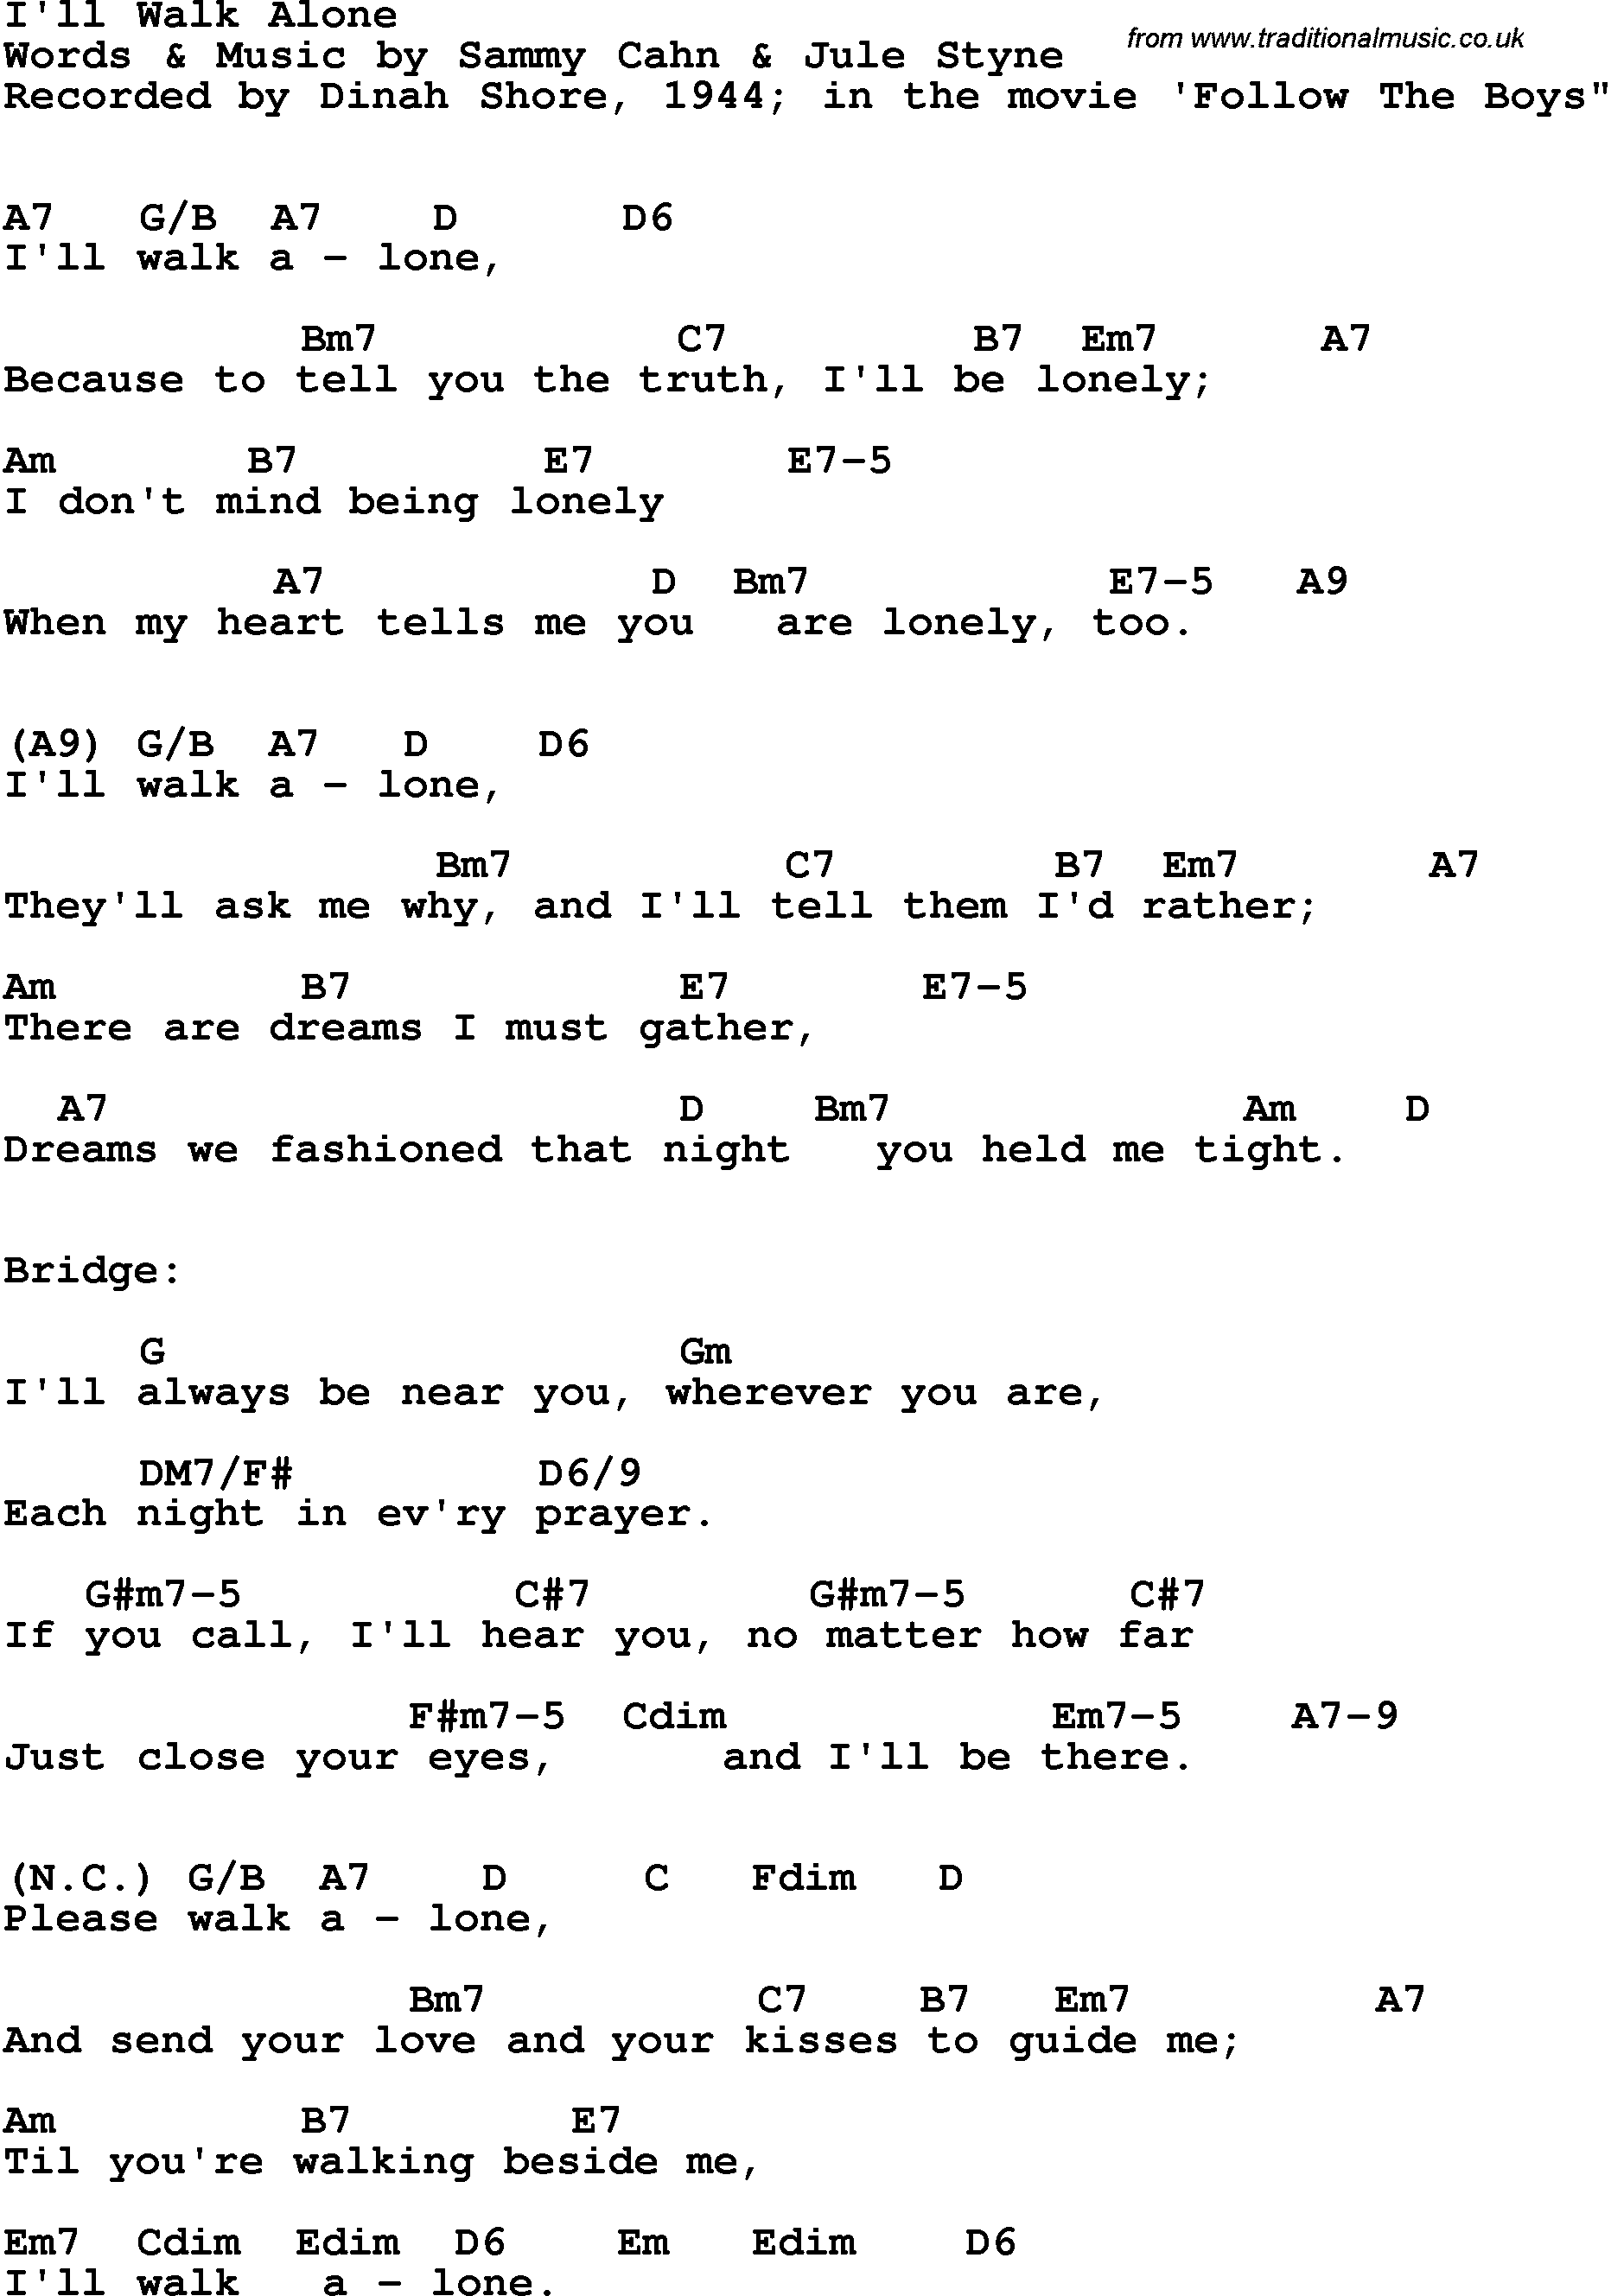 Song Lyrics with guitar chords for I'll Walk Alone - Dinah Shore, 1944